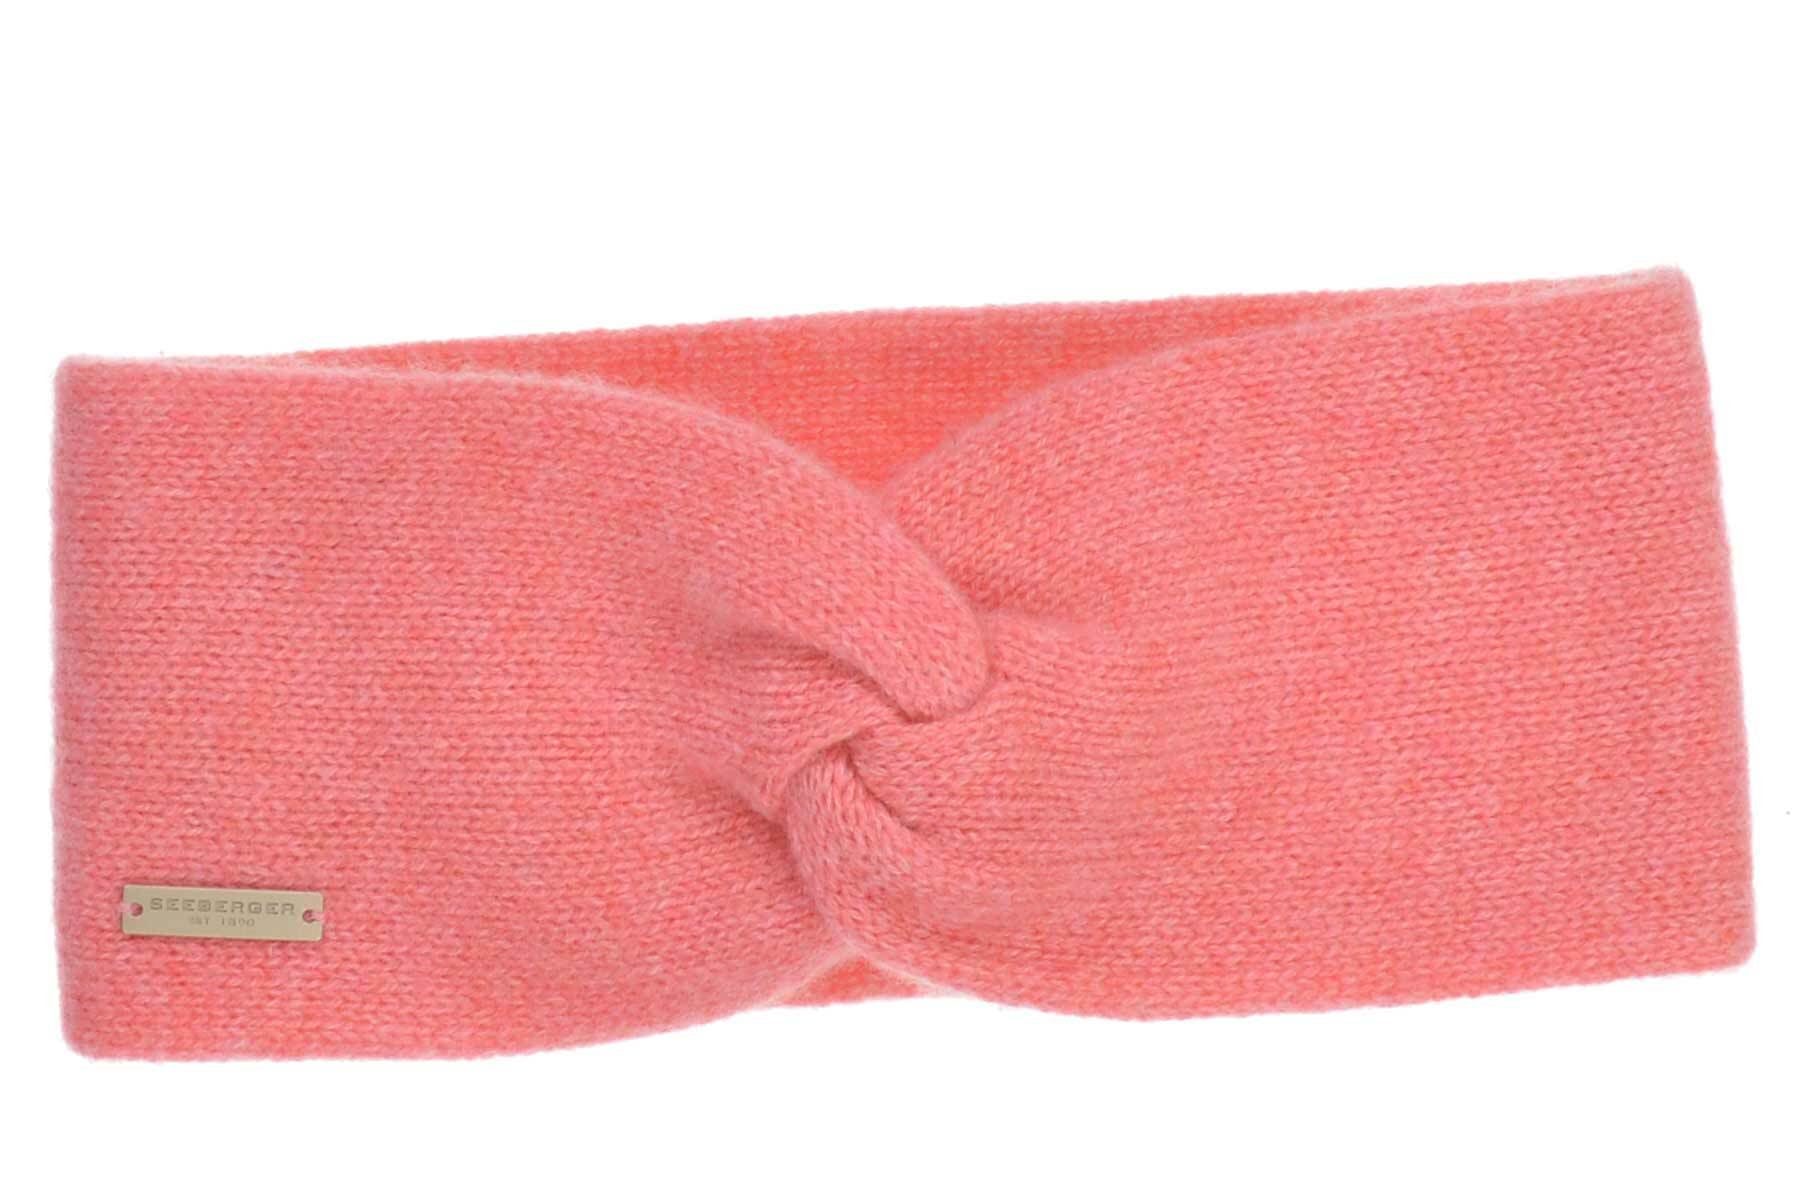 Seeberger Stirnband Cashmere Stirnband mit Knotendetail 17325-0 hummer